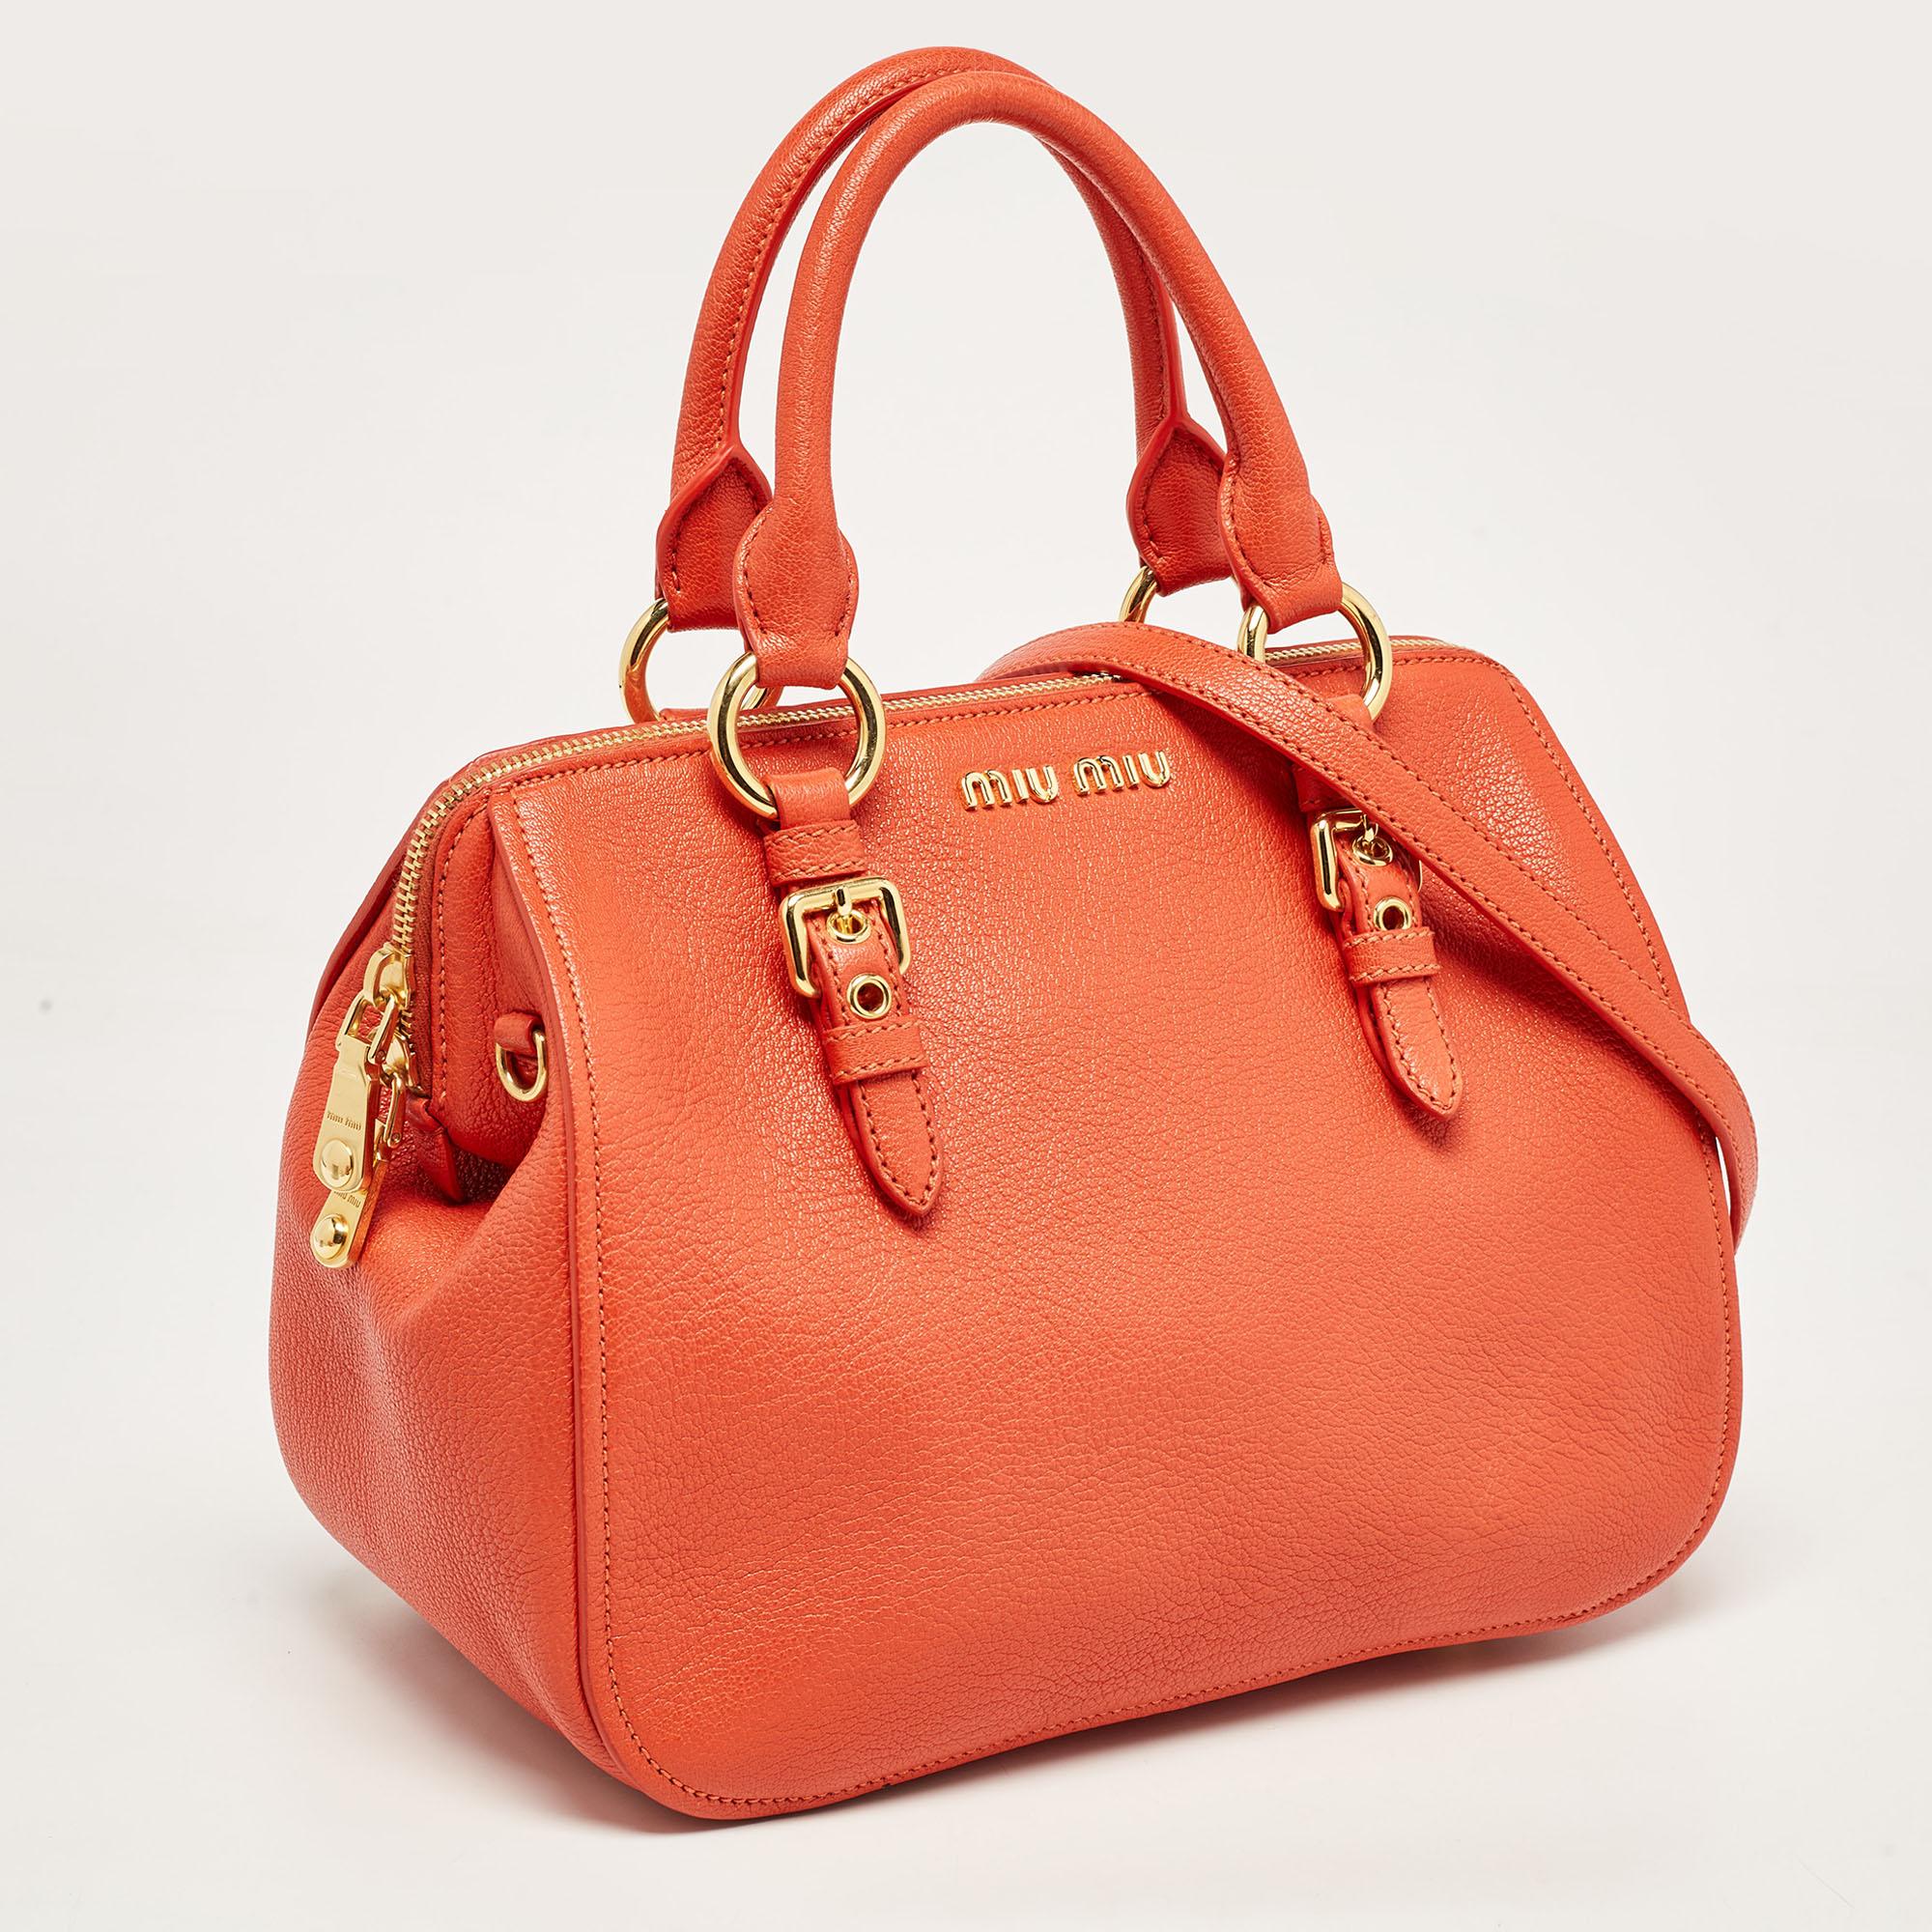 Miu Miu Orange Madras Leather Baulleto Bag In Excellent Condition For Sale In Dubai, Al Qouz 2